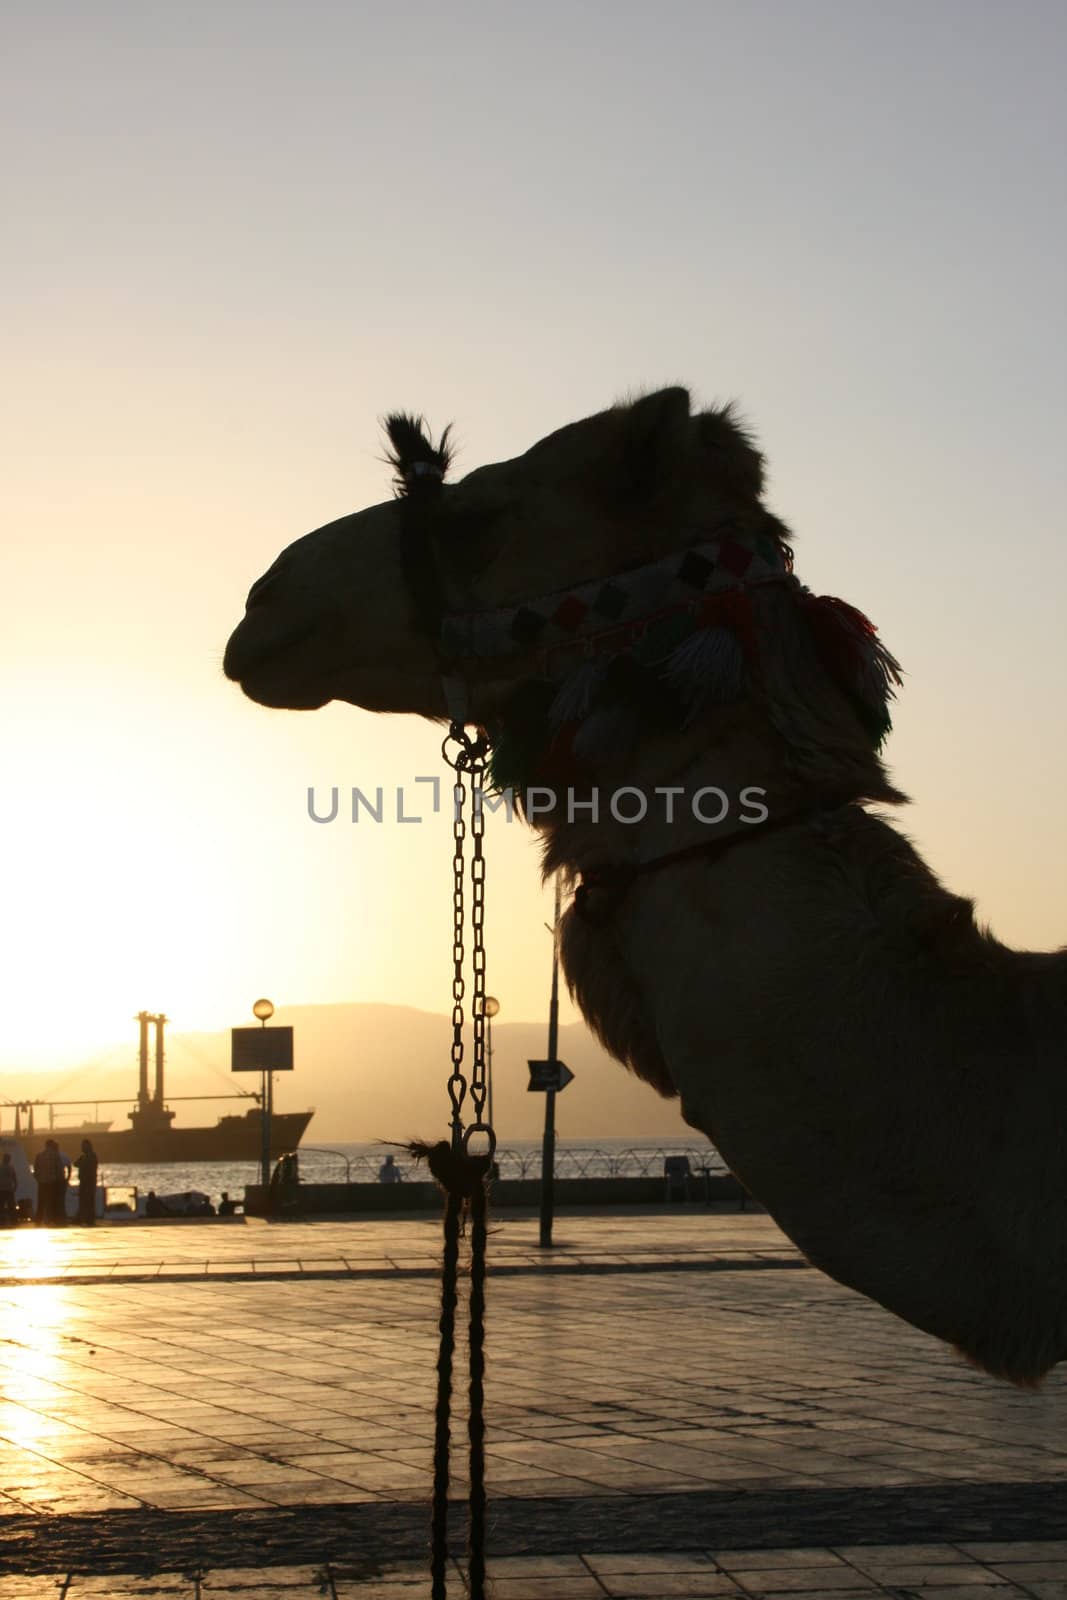 A camel enjoying the sunset in Aqaba, Jordan